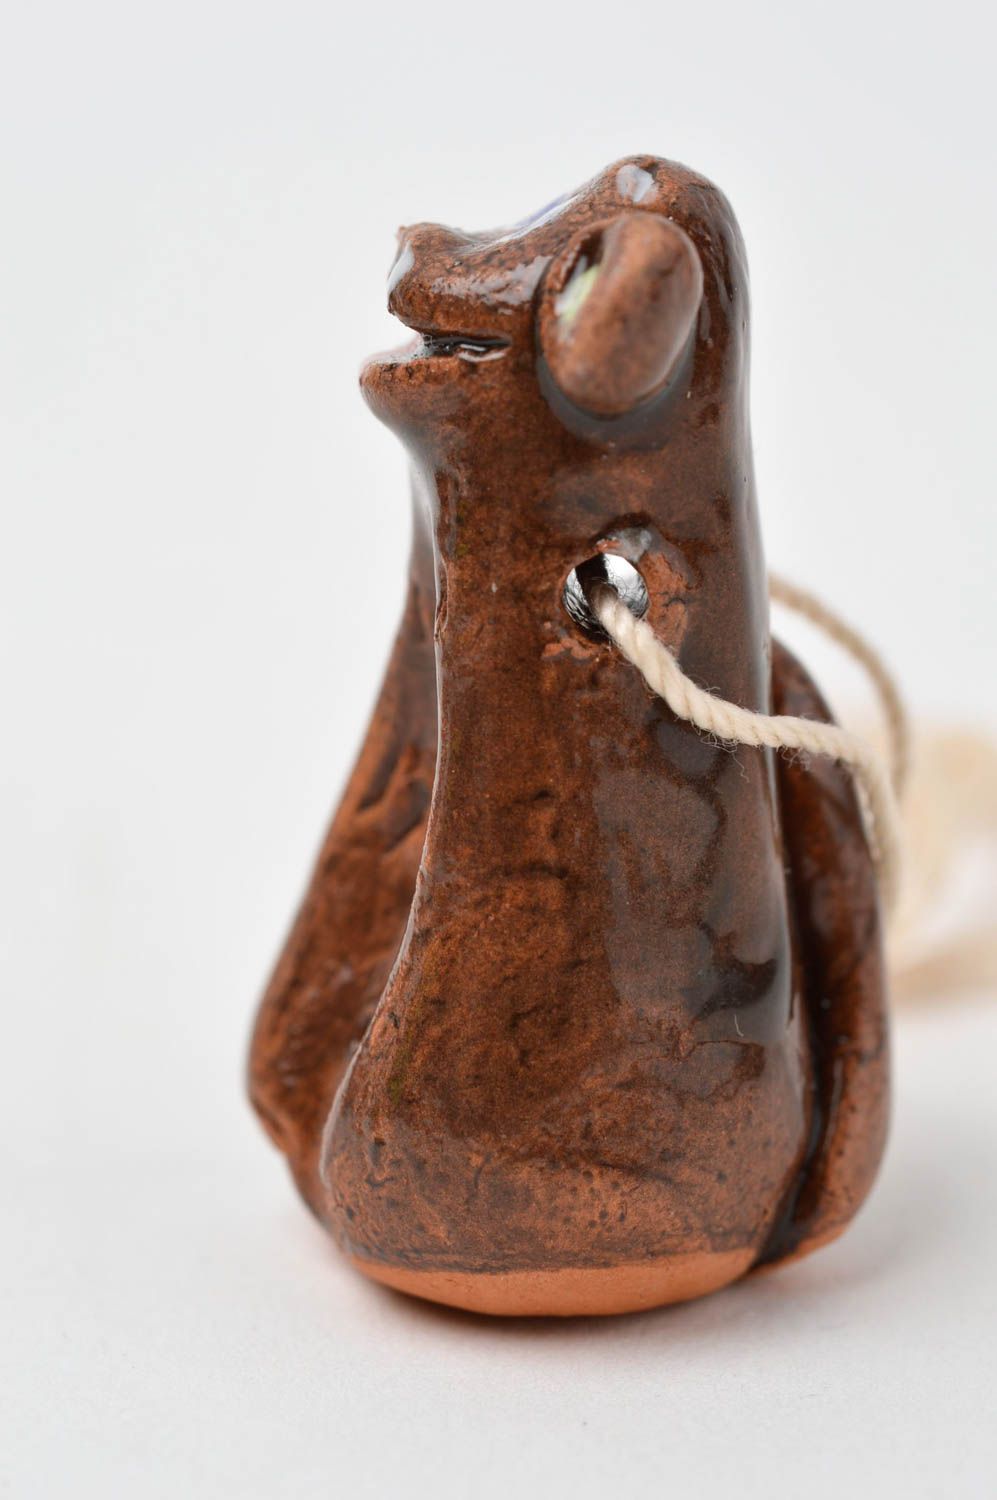 Miniatur Figur handmade Keramik Deko Figuren aus Ton Tier Statue für Interieur foto 3